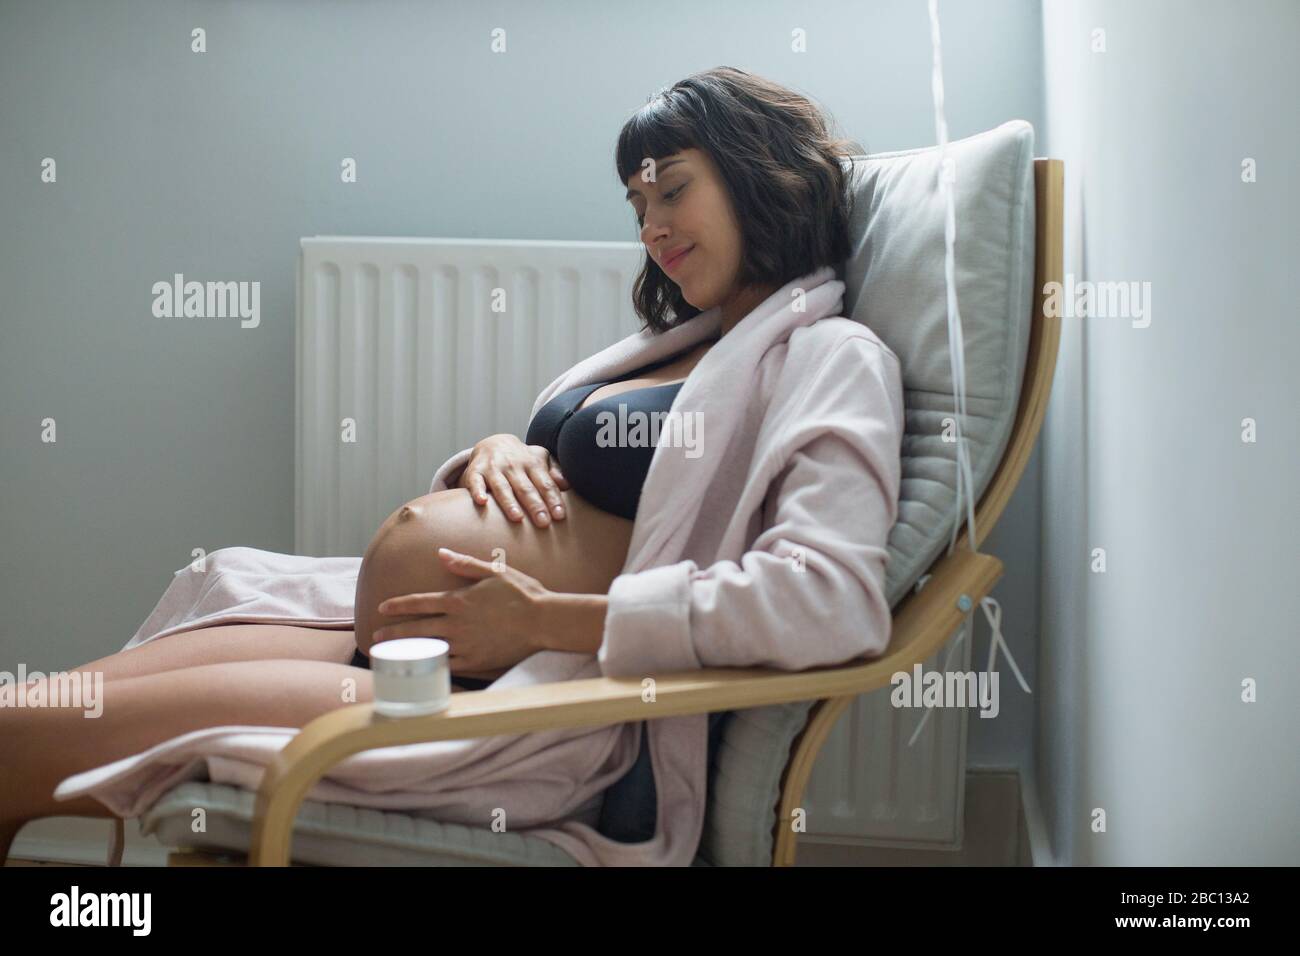 Serene pregnant woman rubbing stomach Stock Photo